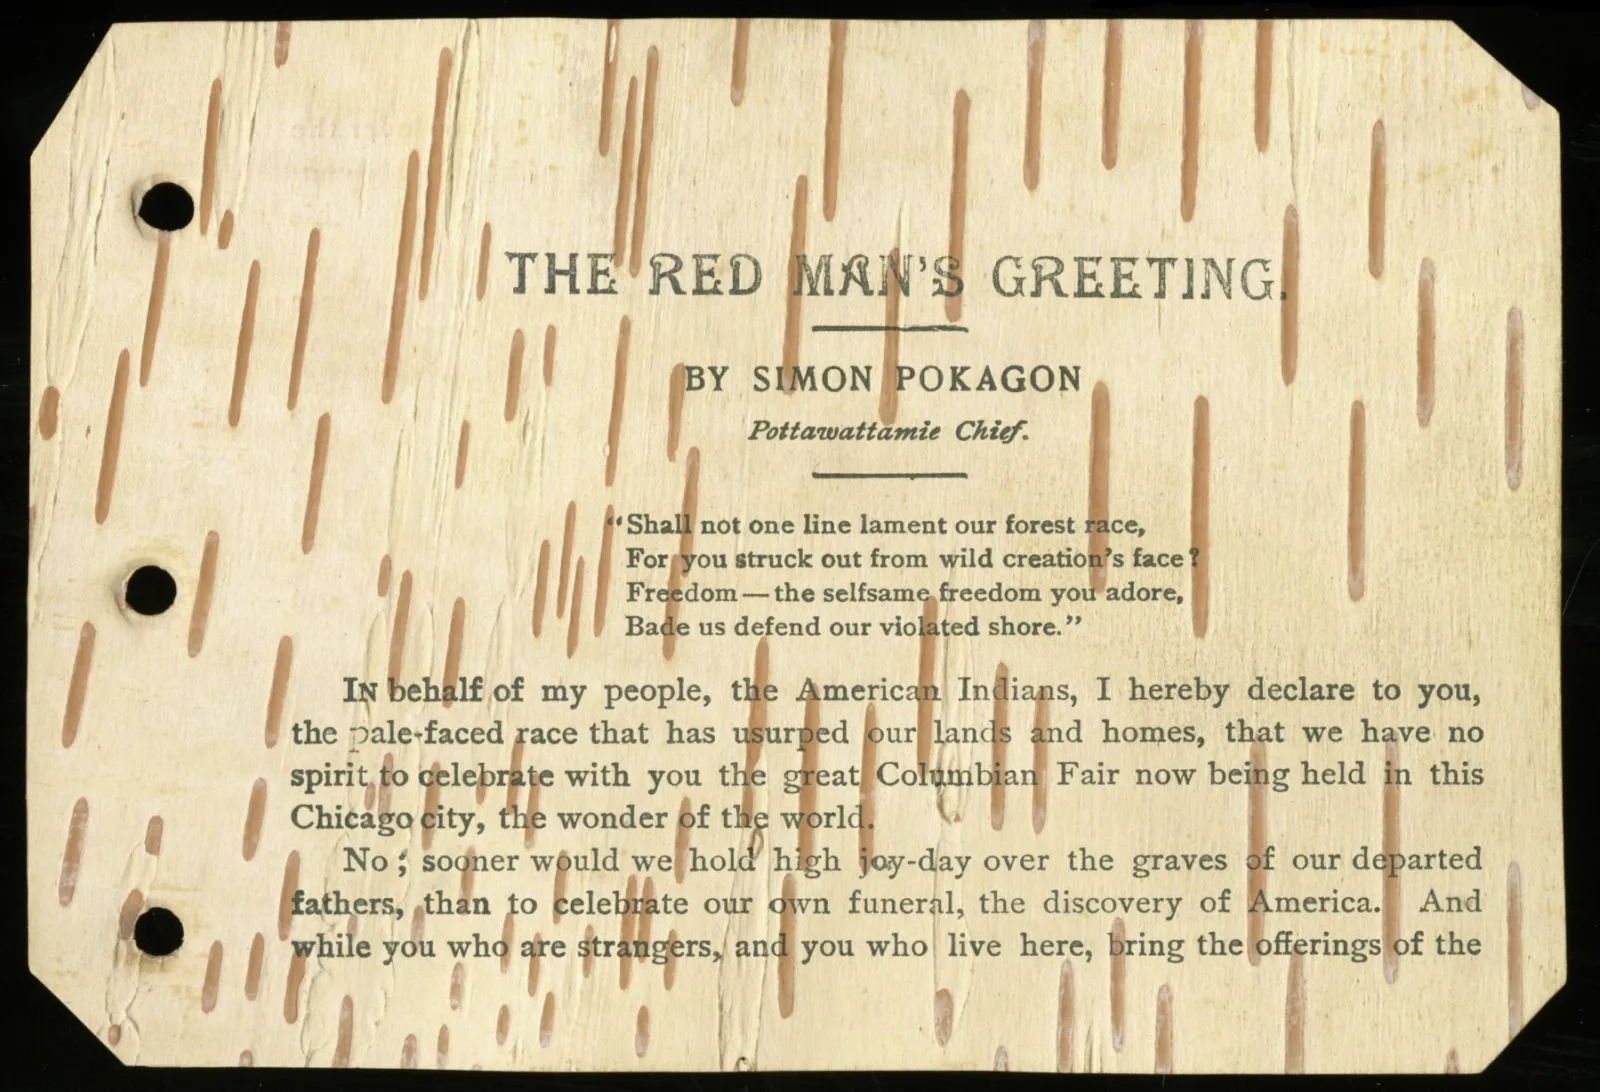 The opening page of Simon Pokagon's "The Red Man's Greeting," printed on birchbark